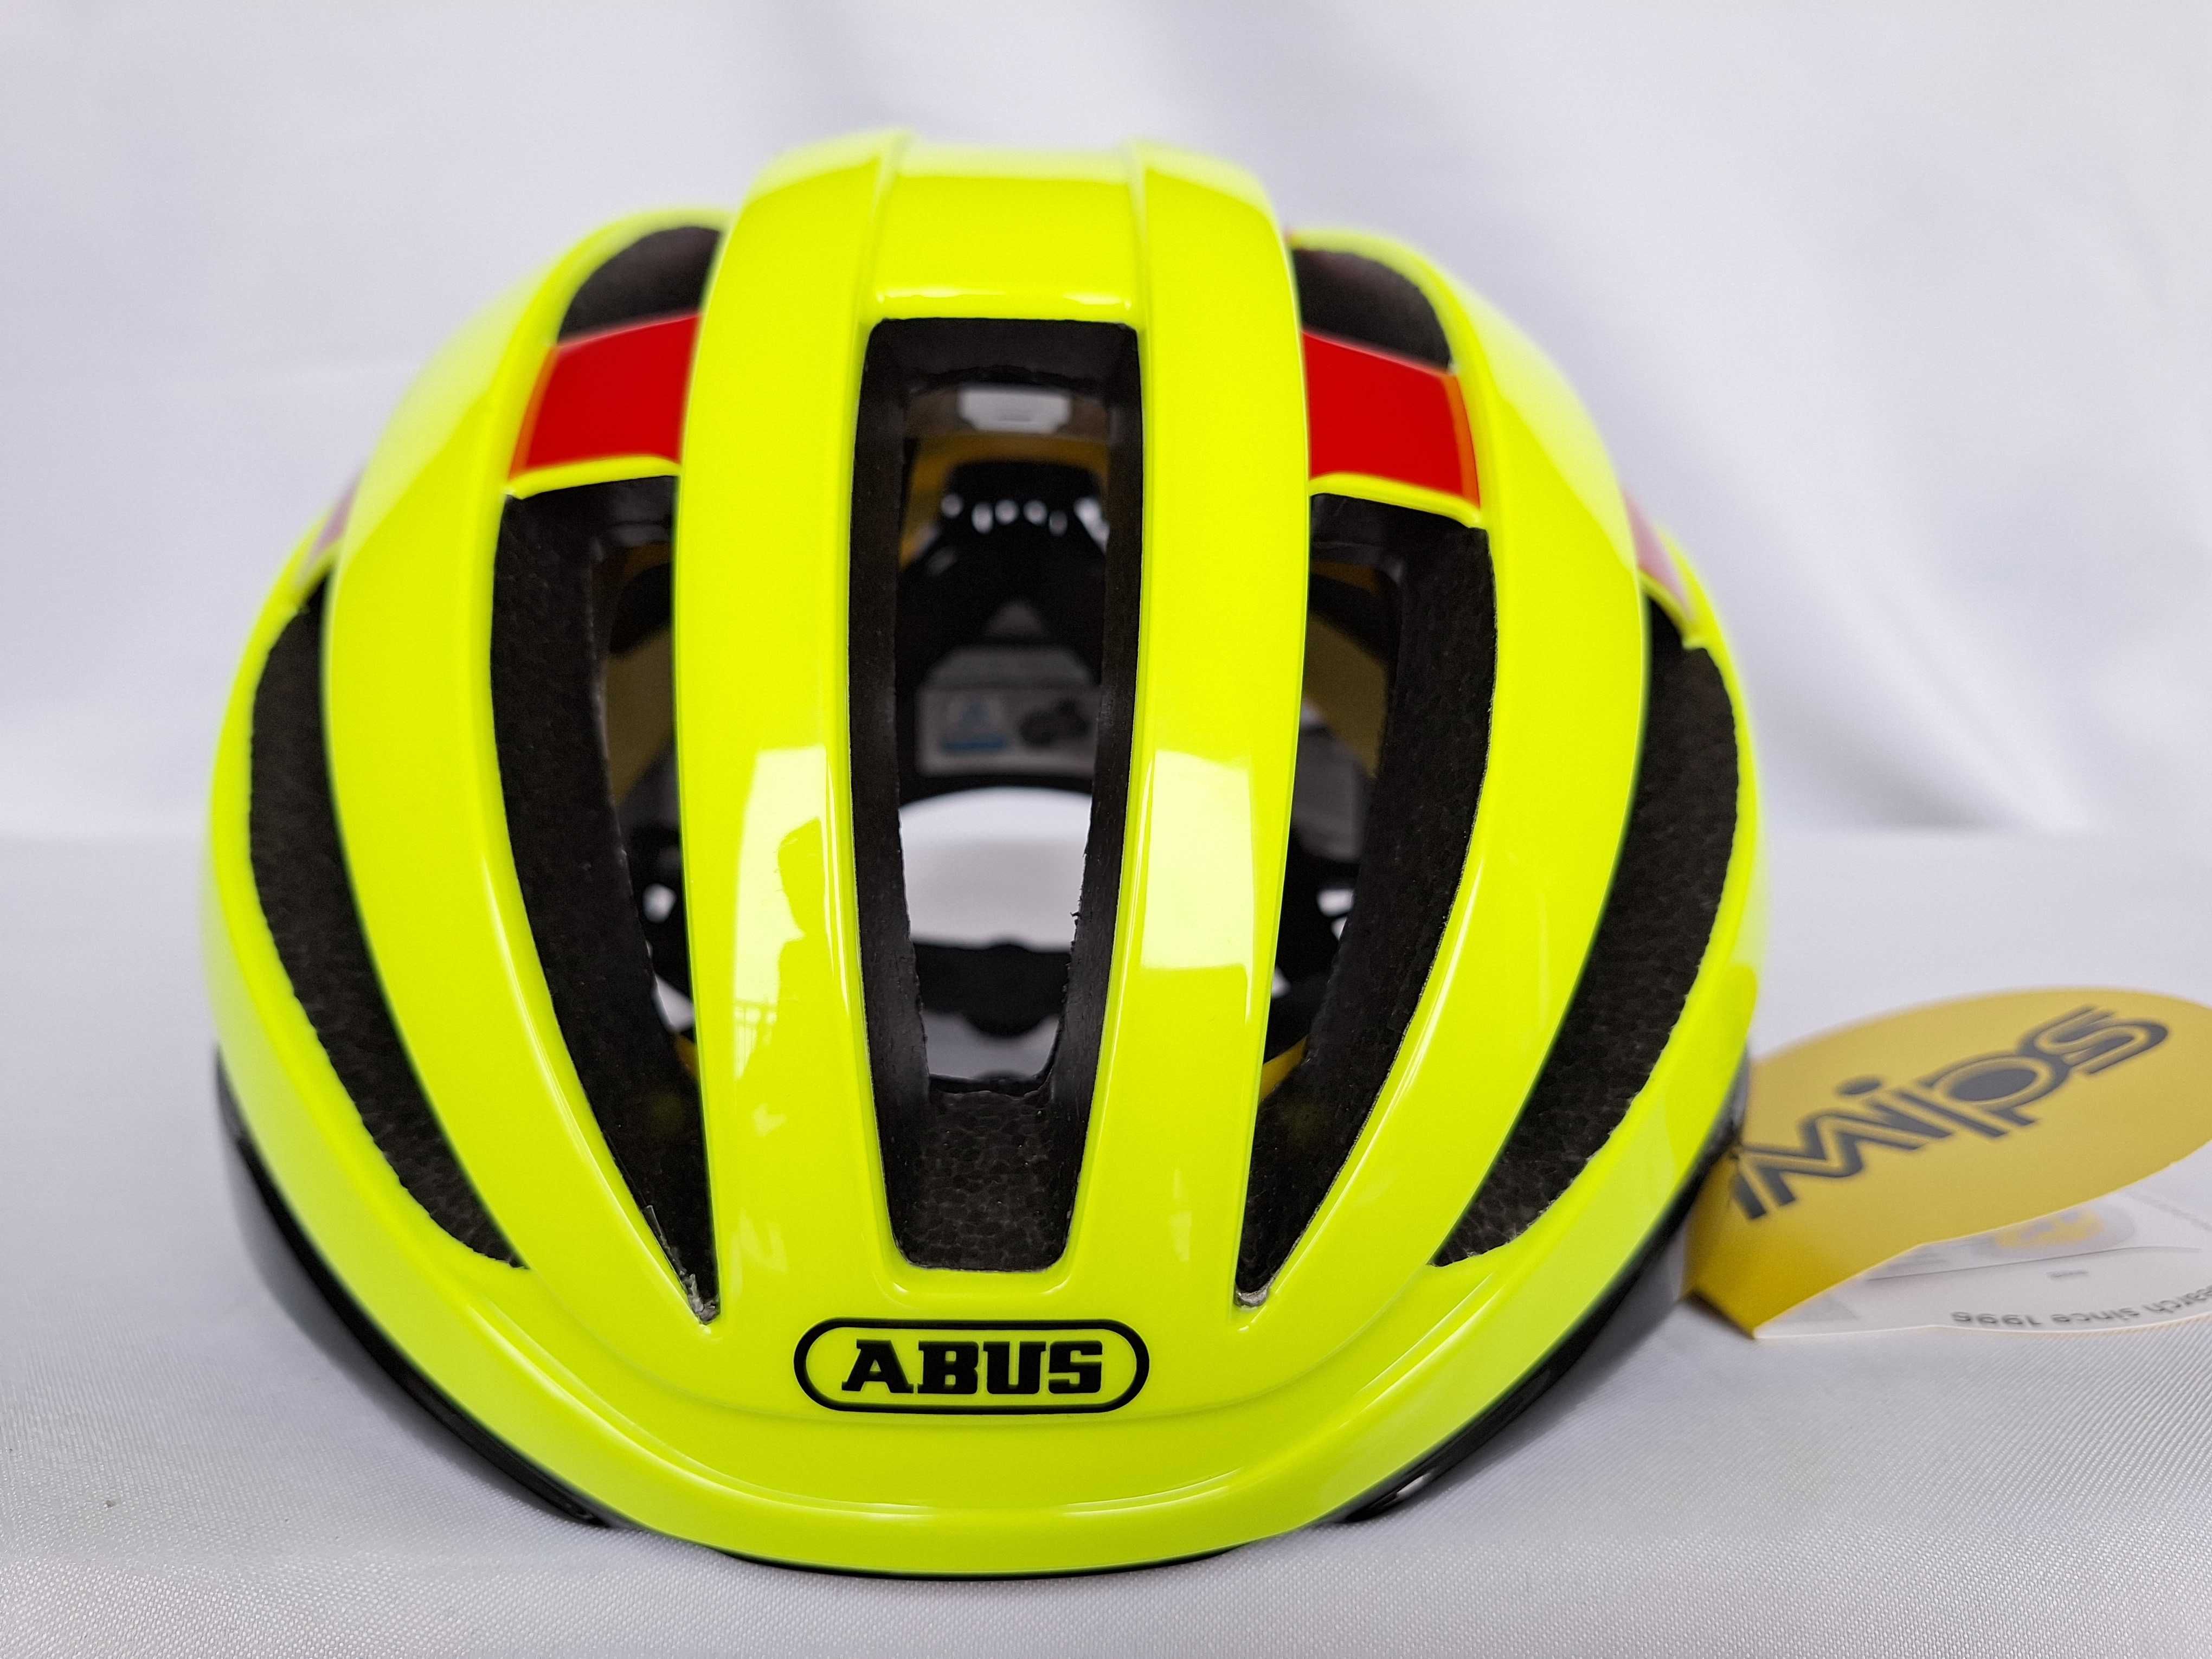 Kask rowerowy Abus Viantor Mips Neon Yellow L 58-62cm